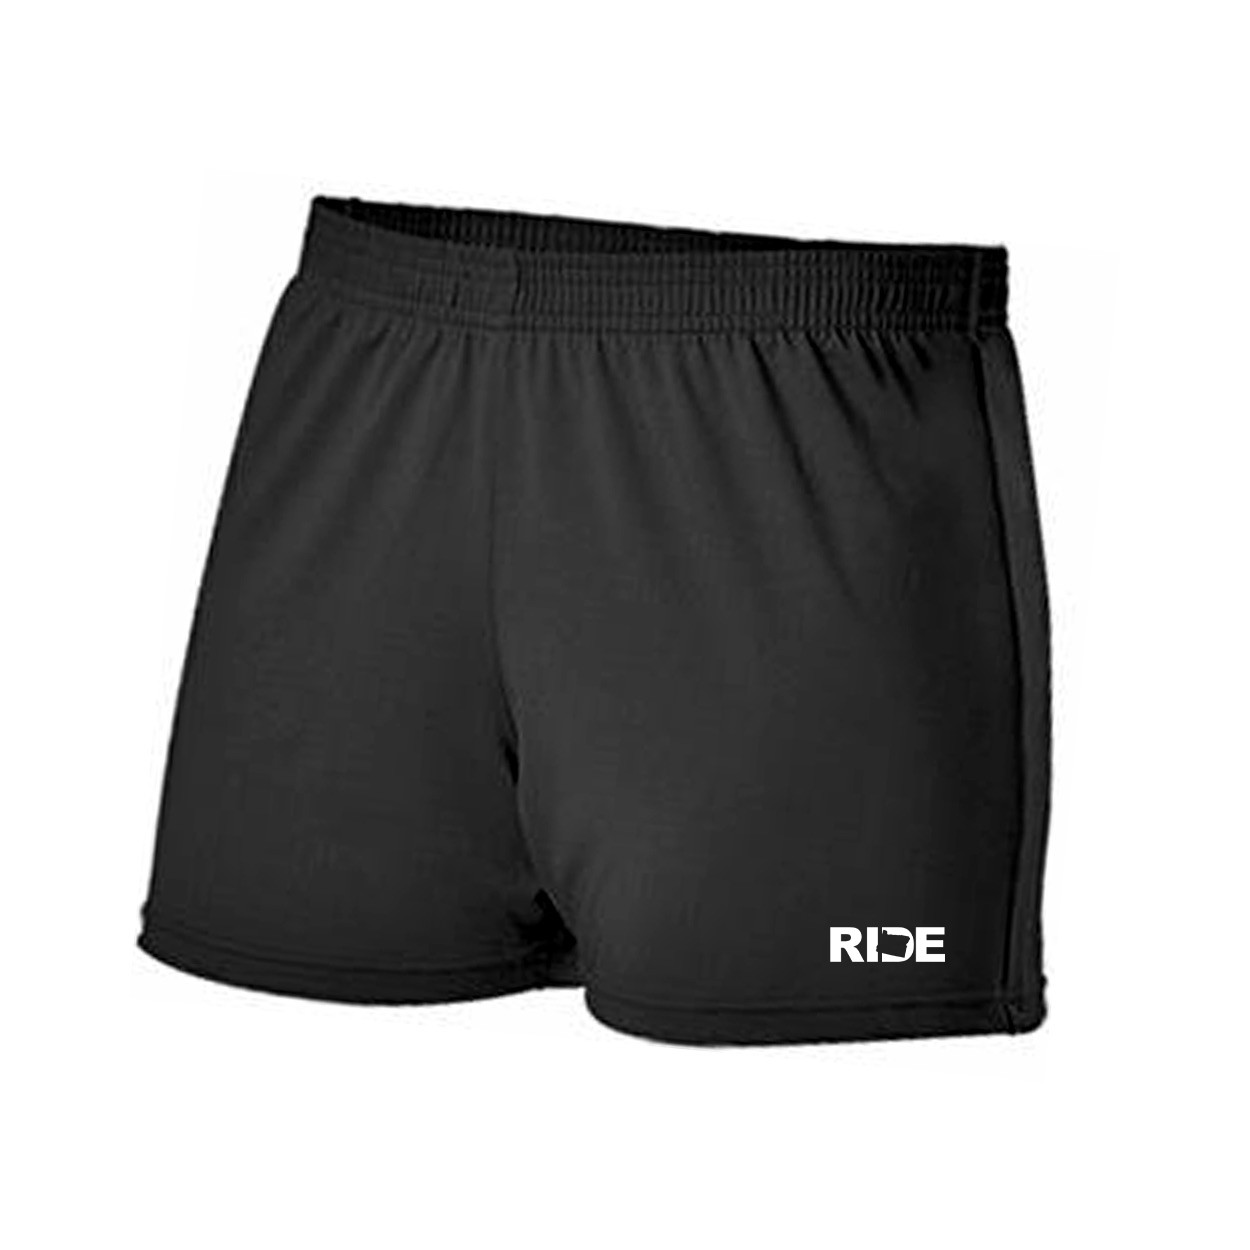 Ride Oregon Classic Women's Cheer Shorts Black (White Logo)